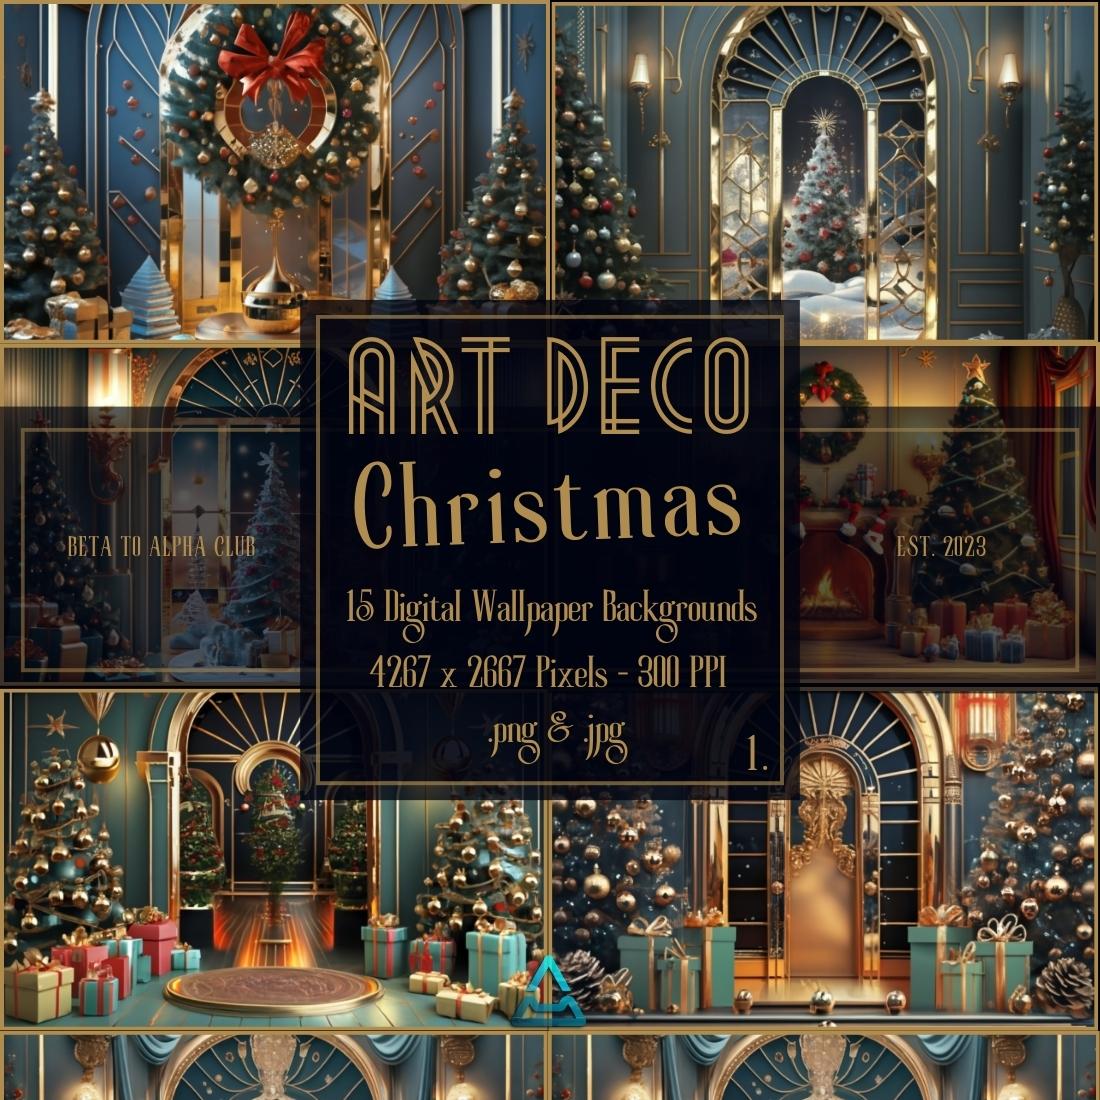 Christmas Art Deco Digital Backgrounds cover image.